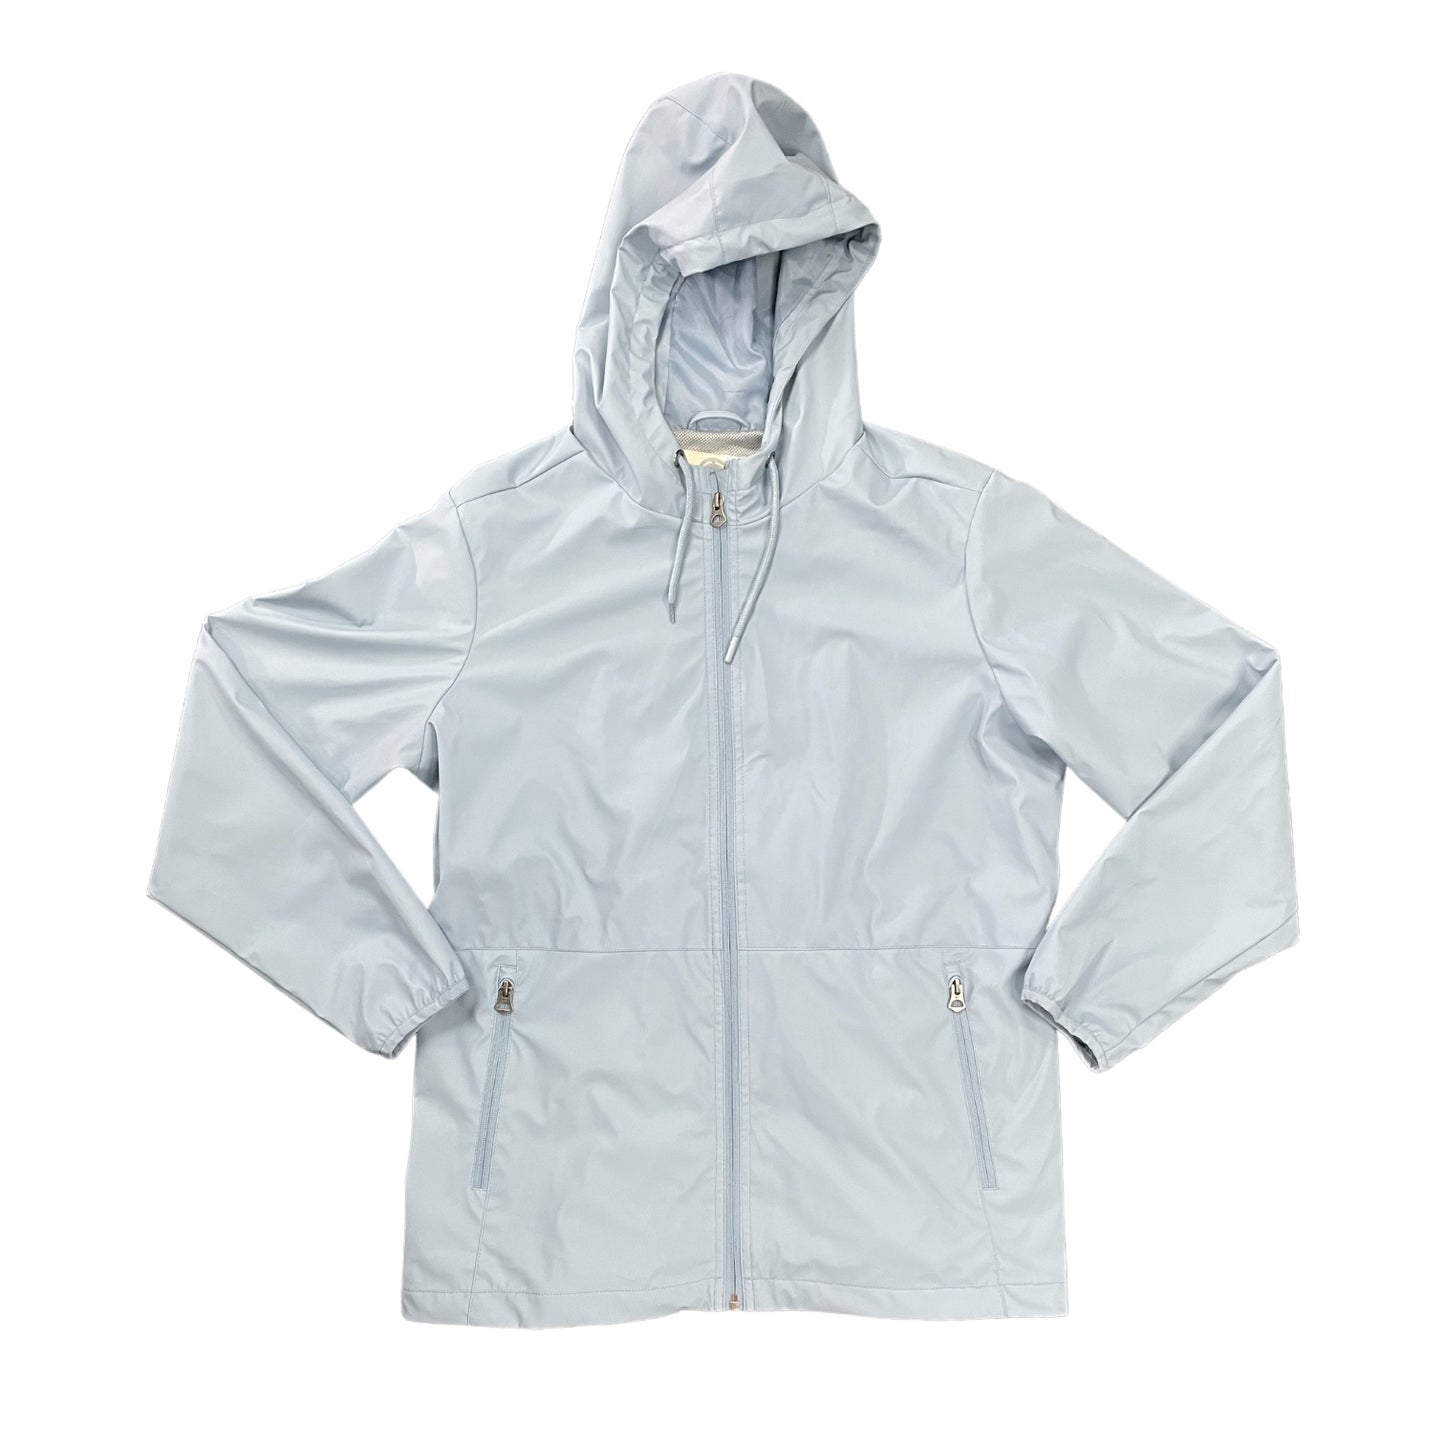 WP Weather Proof Women's Casual Lightweight Hooded Rain Jacket (Faded Denim, M)